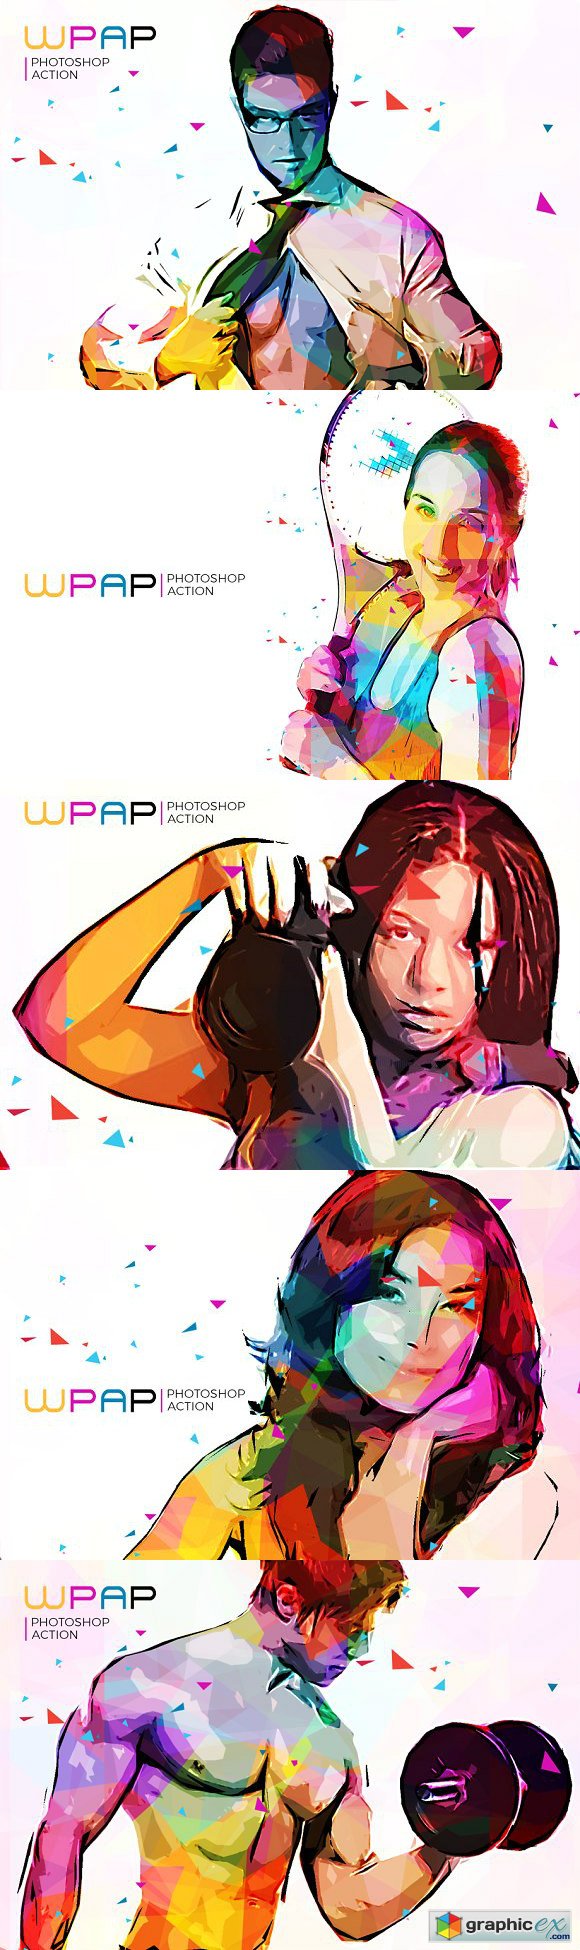 WPAP Art Photoshop Action